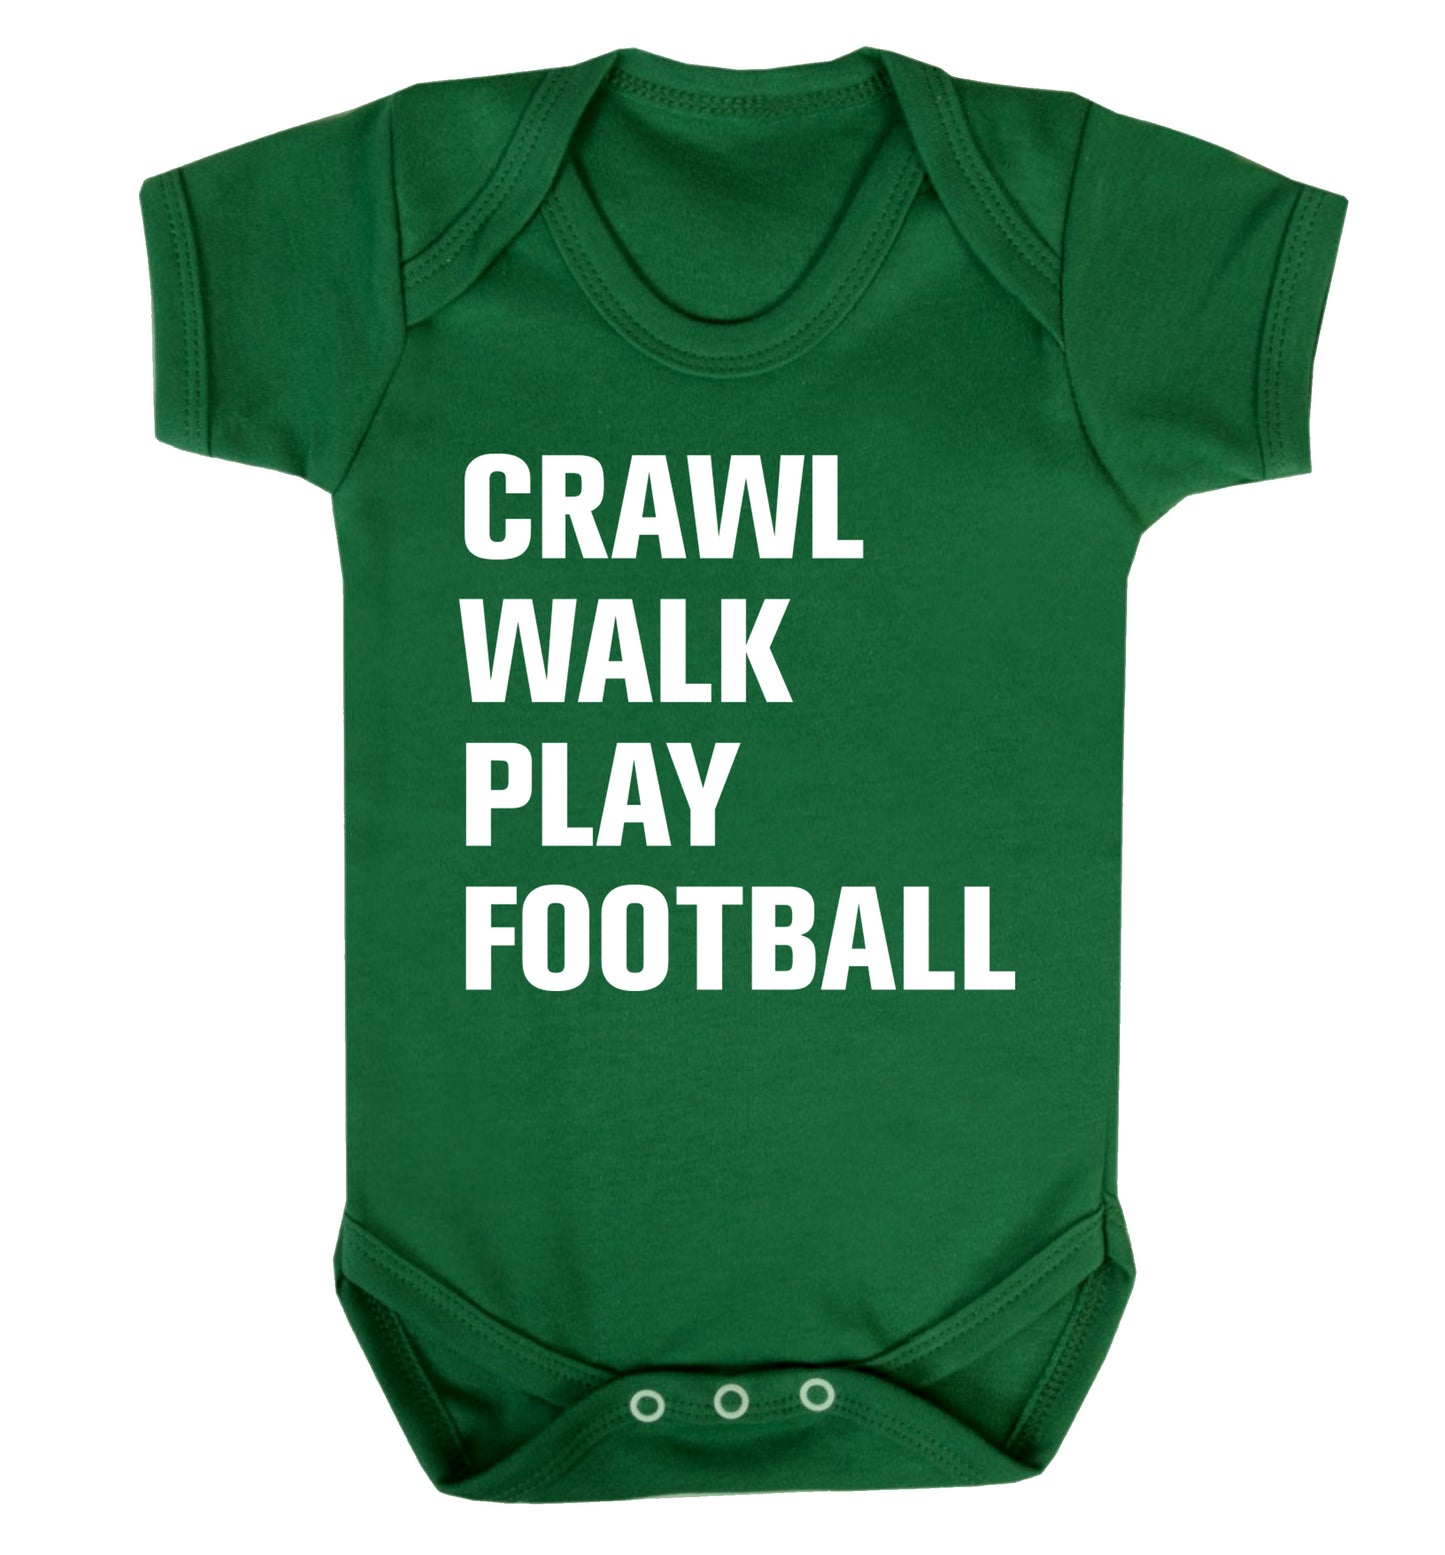 Crawl, walk, play football Baby Vest green 18-24 months